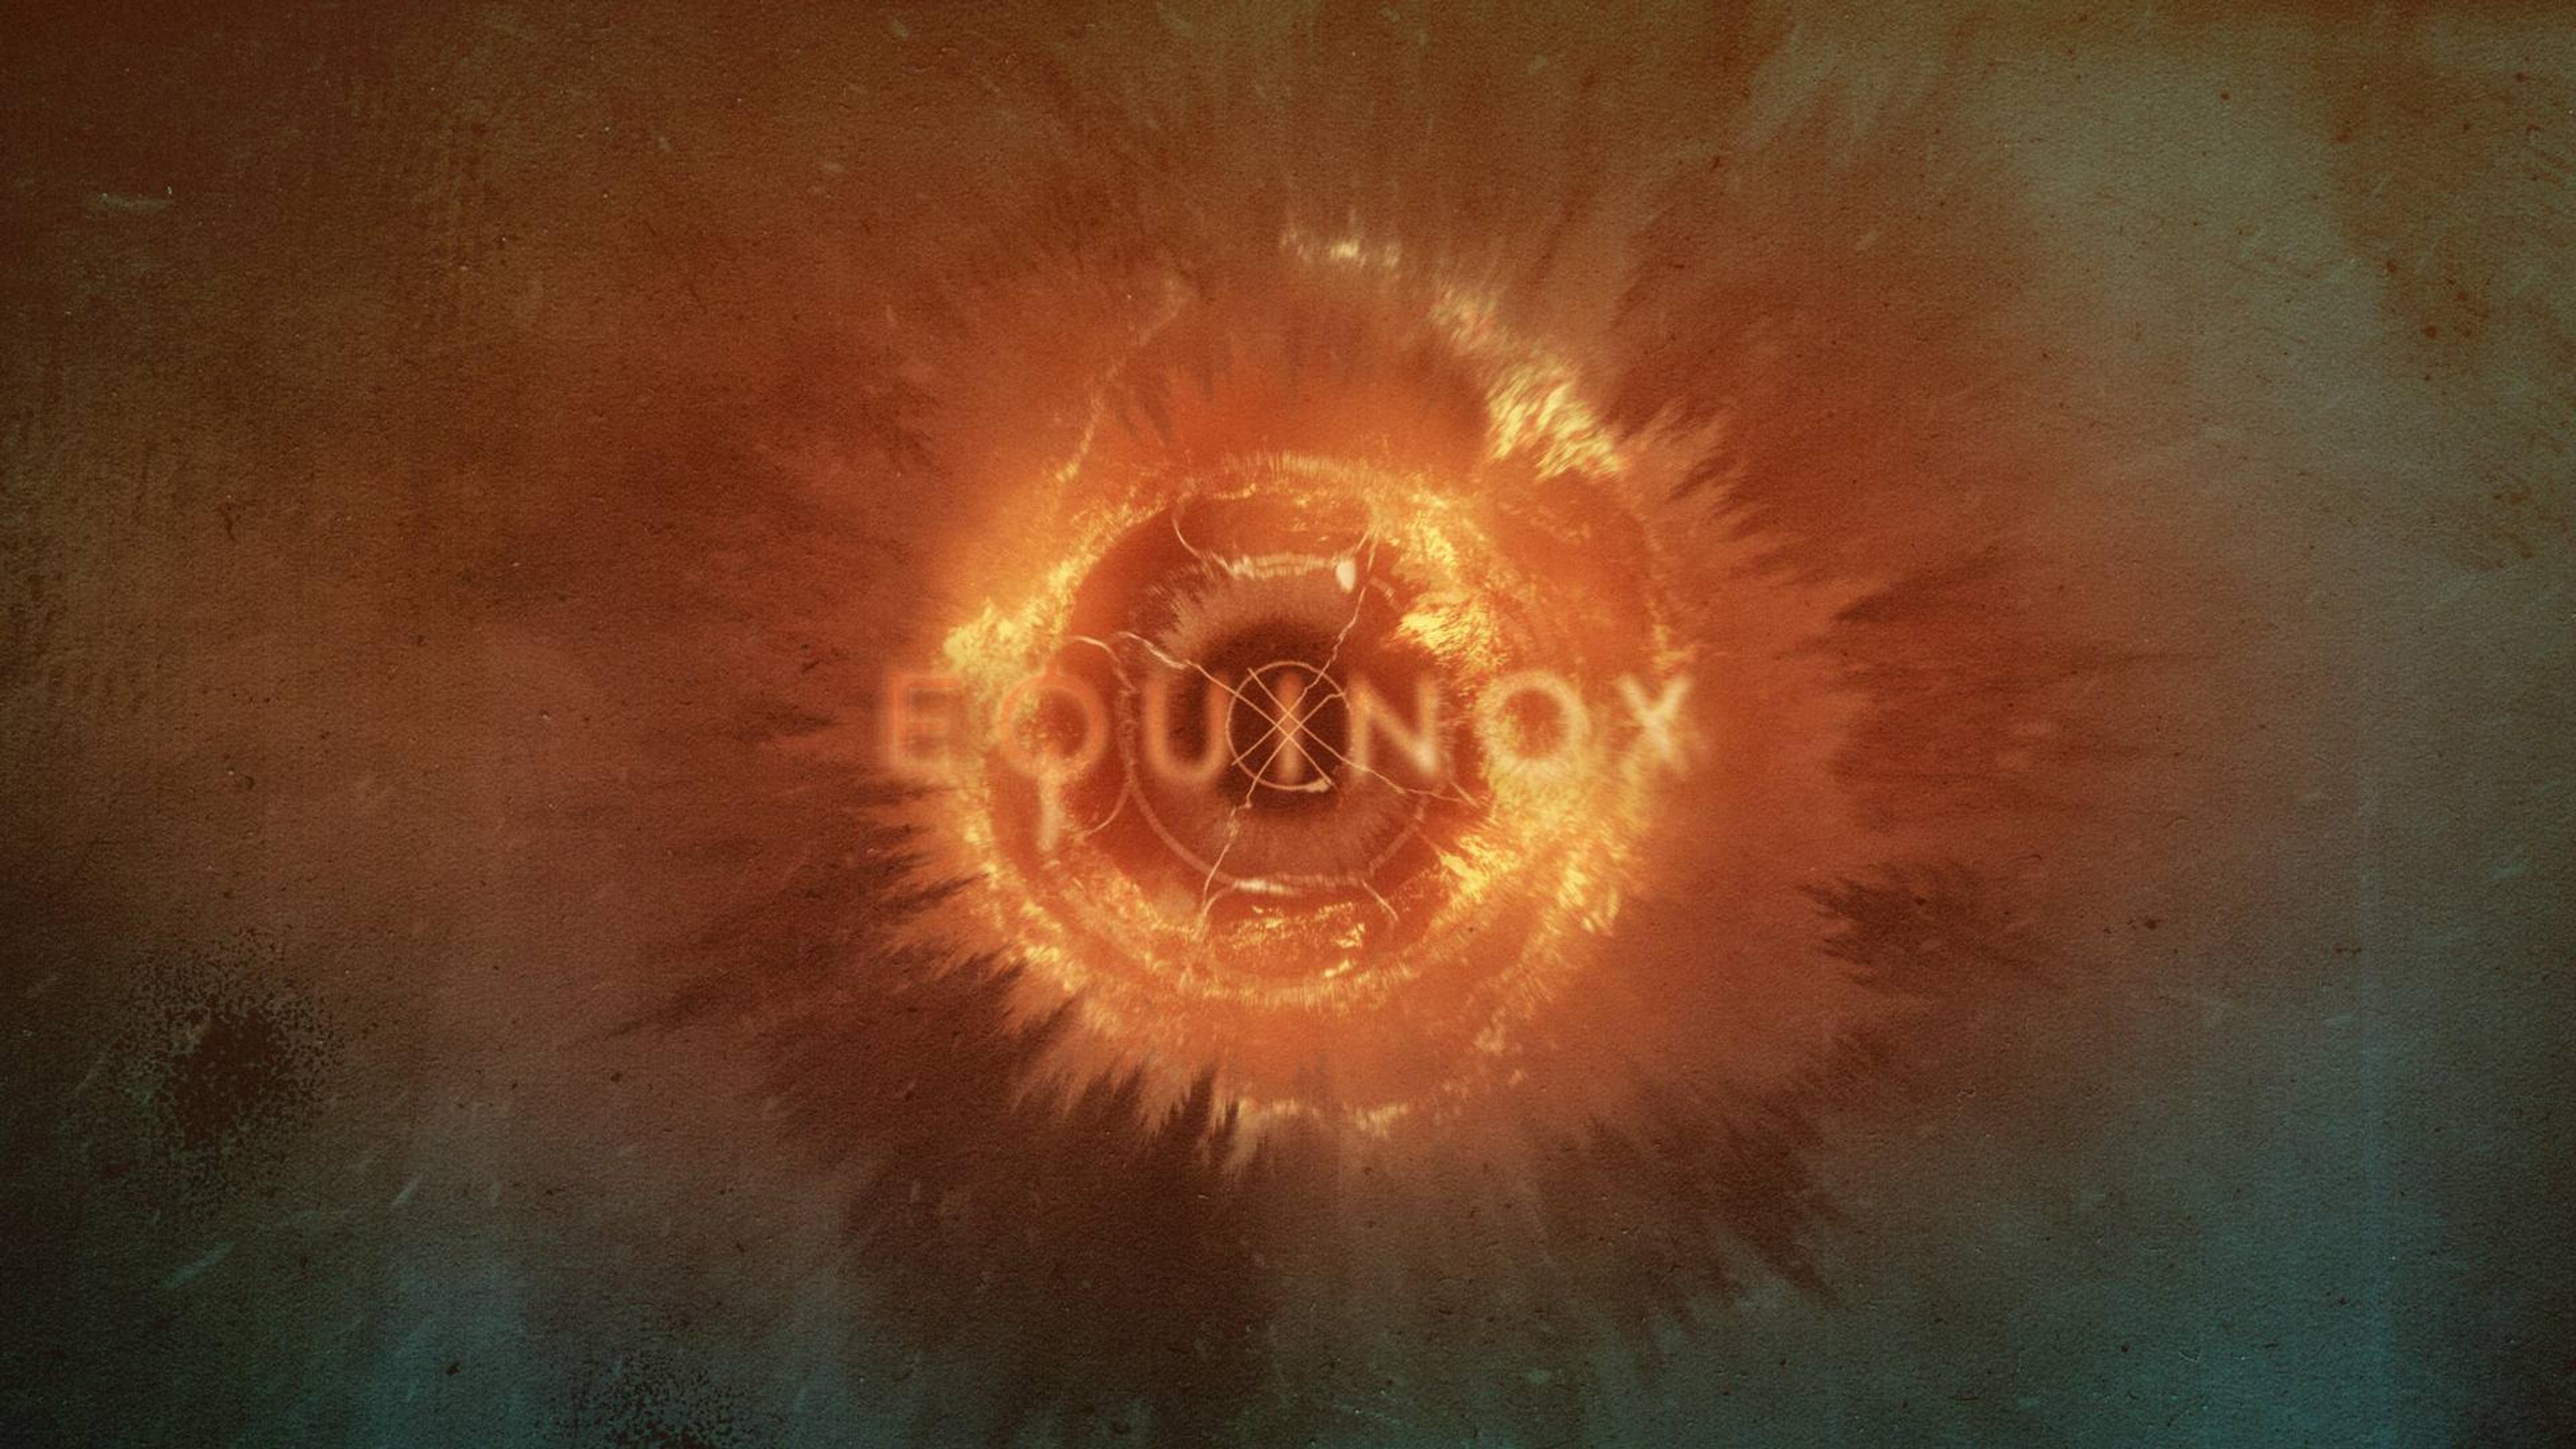 Equinox title